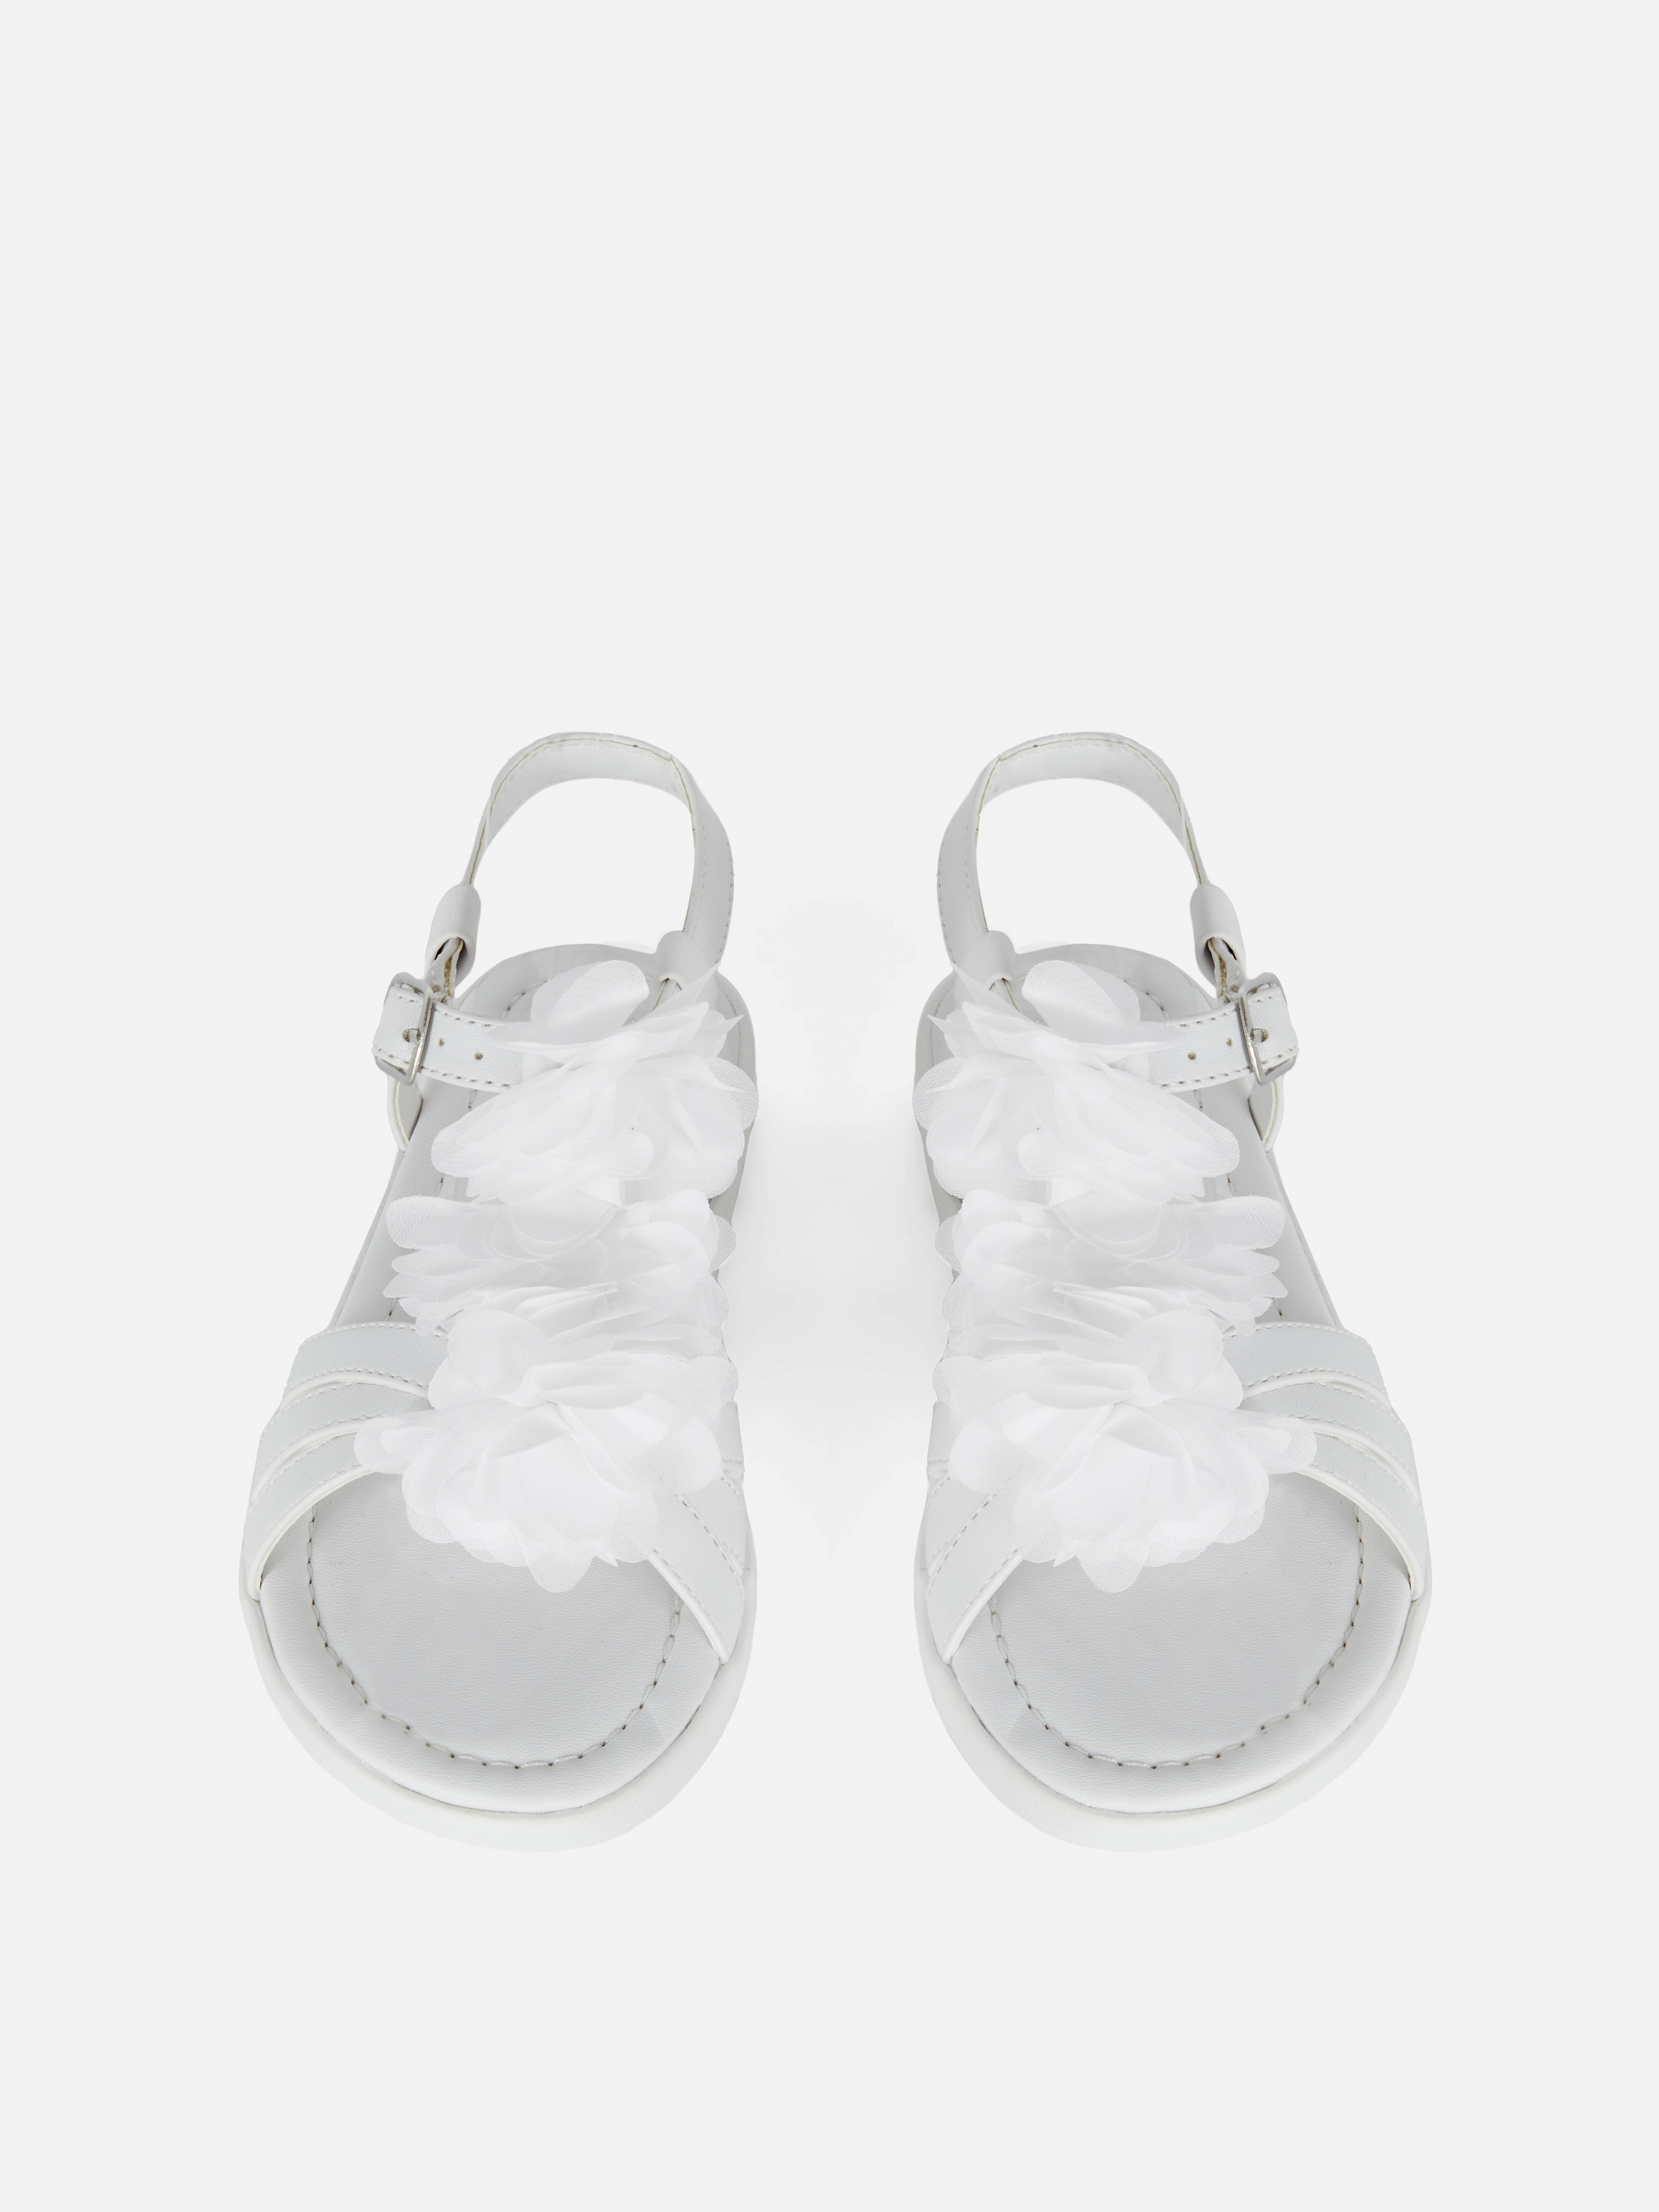 Sandalias con detalle floral | Zapatos para niña | Moda para | Ropa para niños | Todos los productos Primark | España